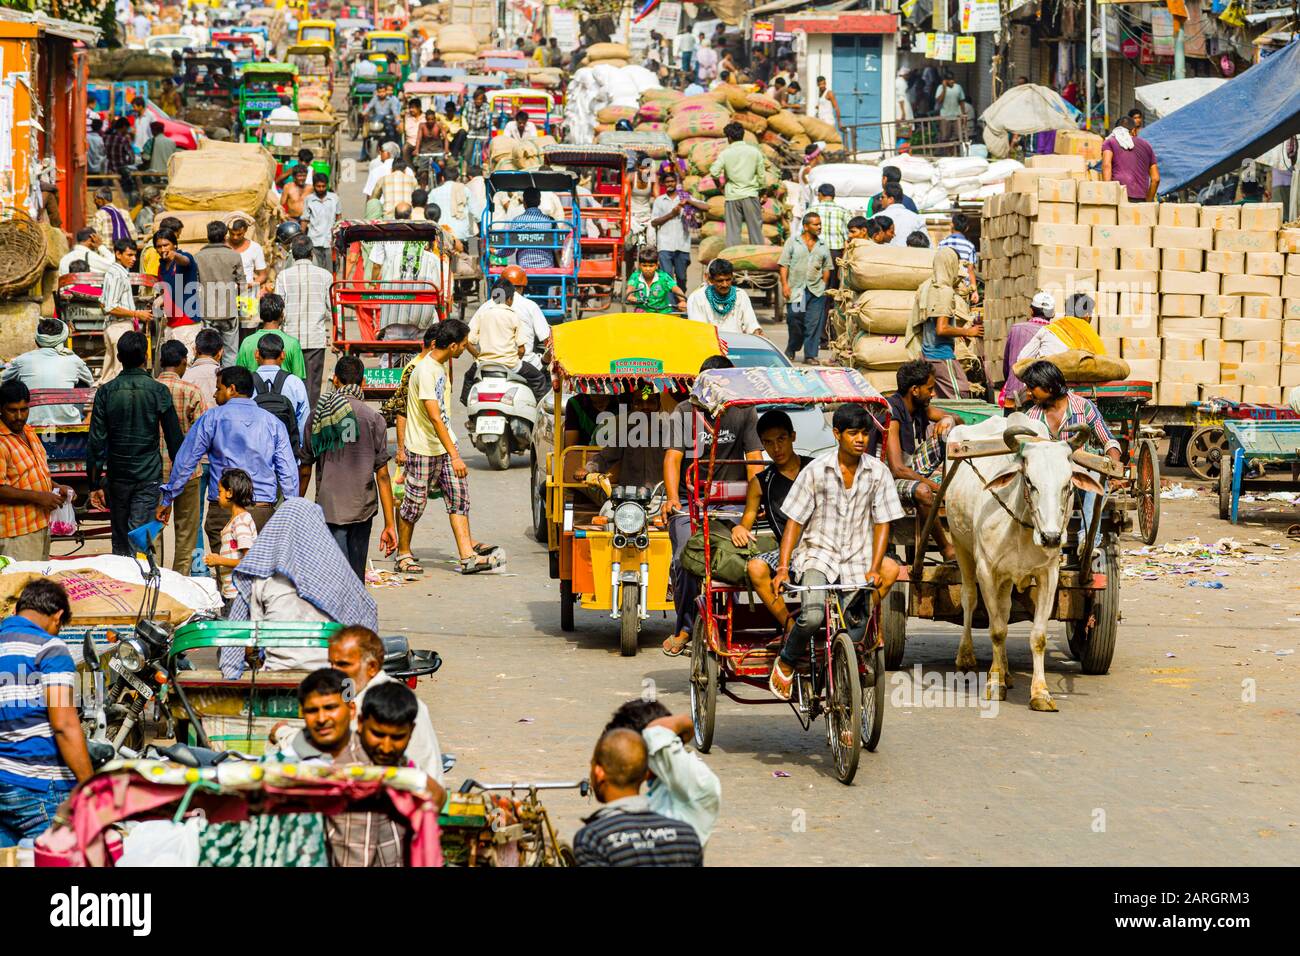 Many cycle rickshaws, motorbikes and people cause crowded traffic on Khari Baoli Road in Old Delhi Stock Photo